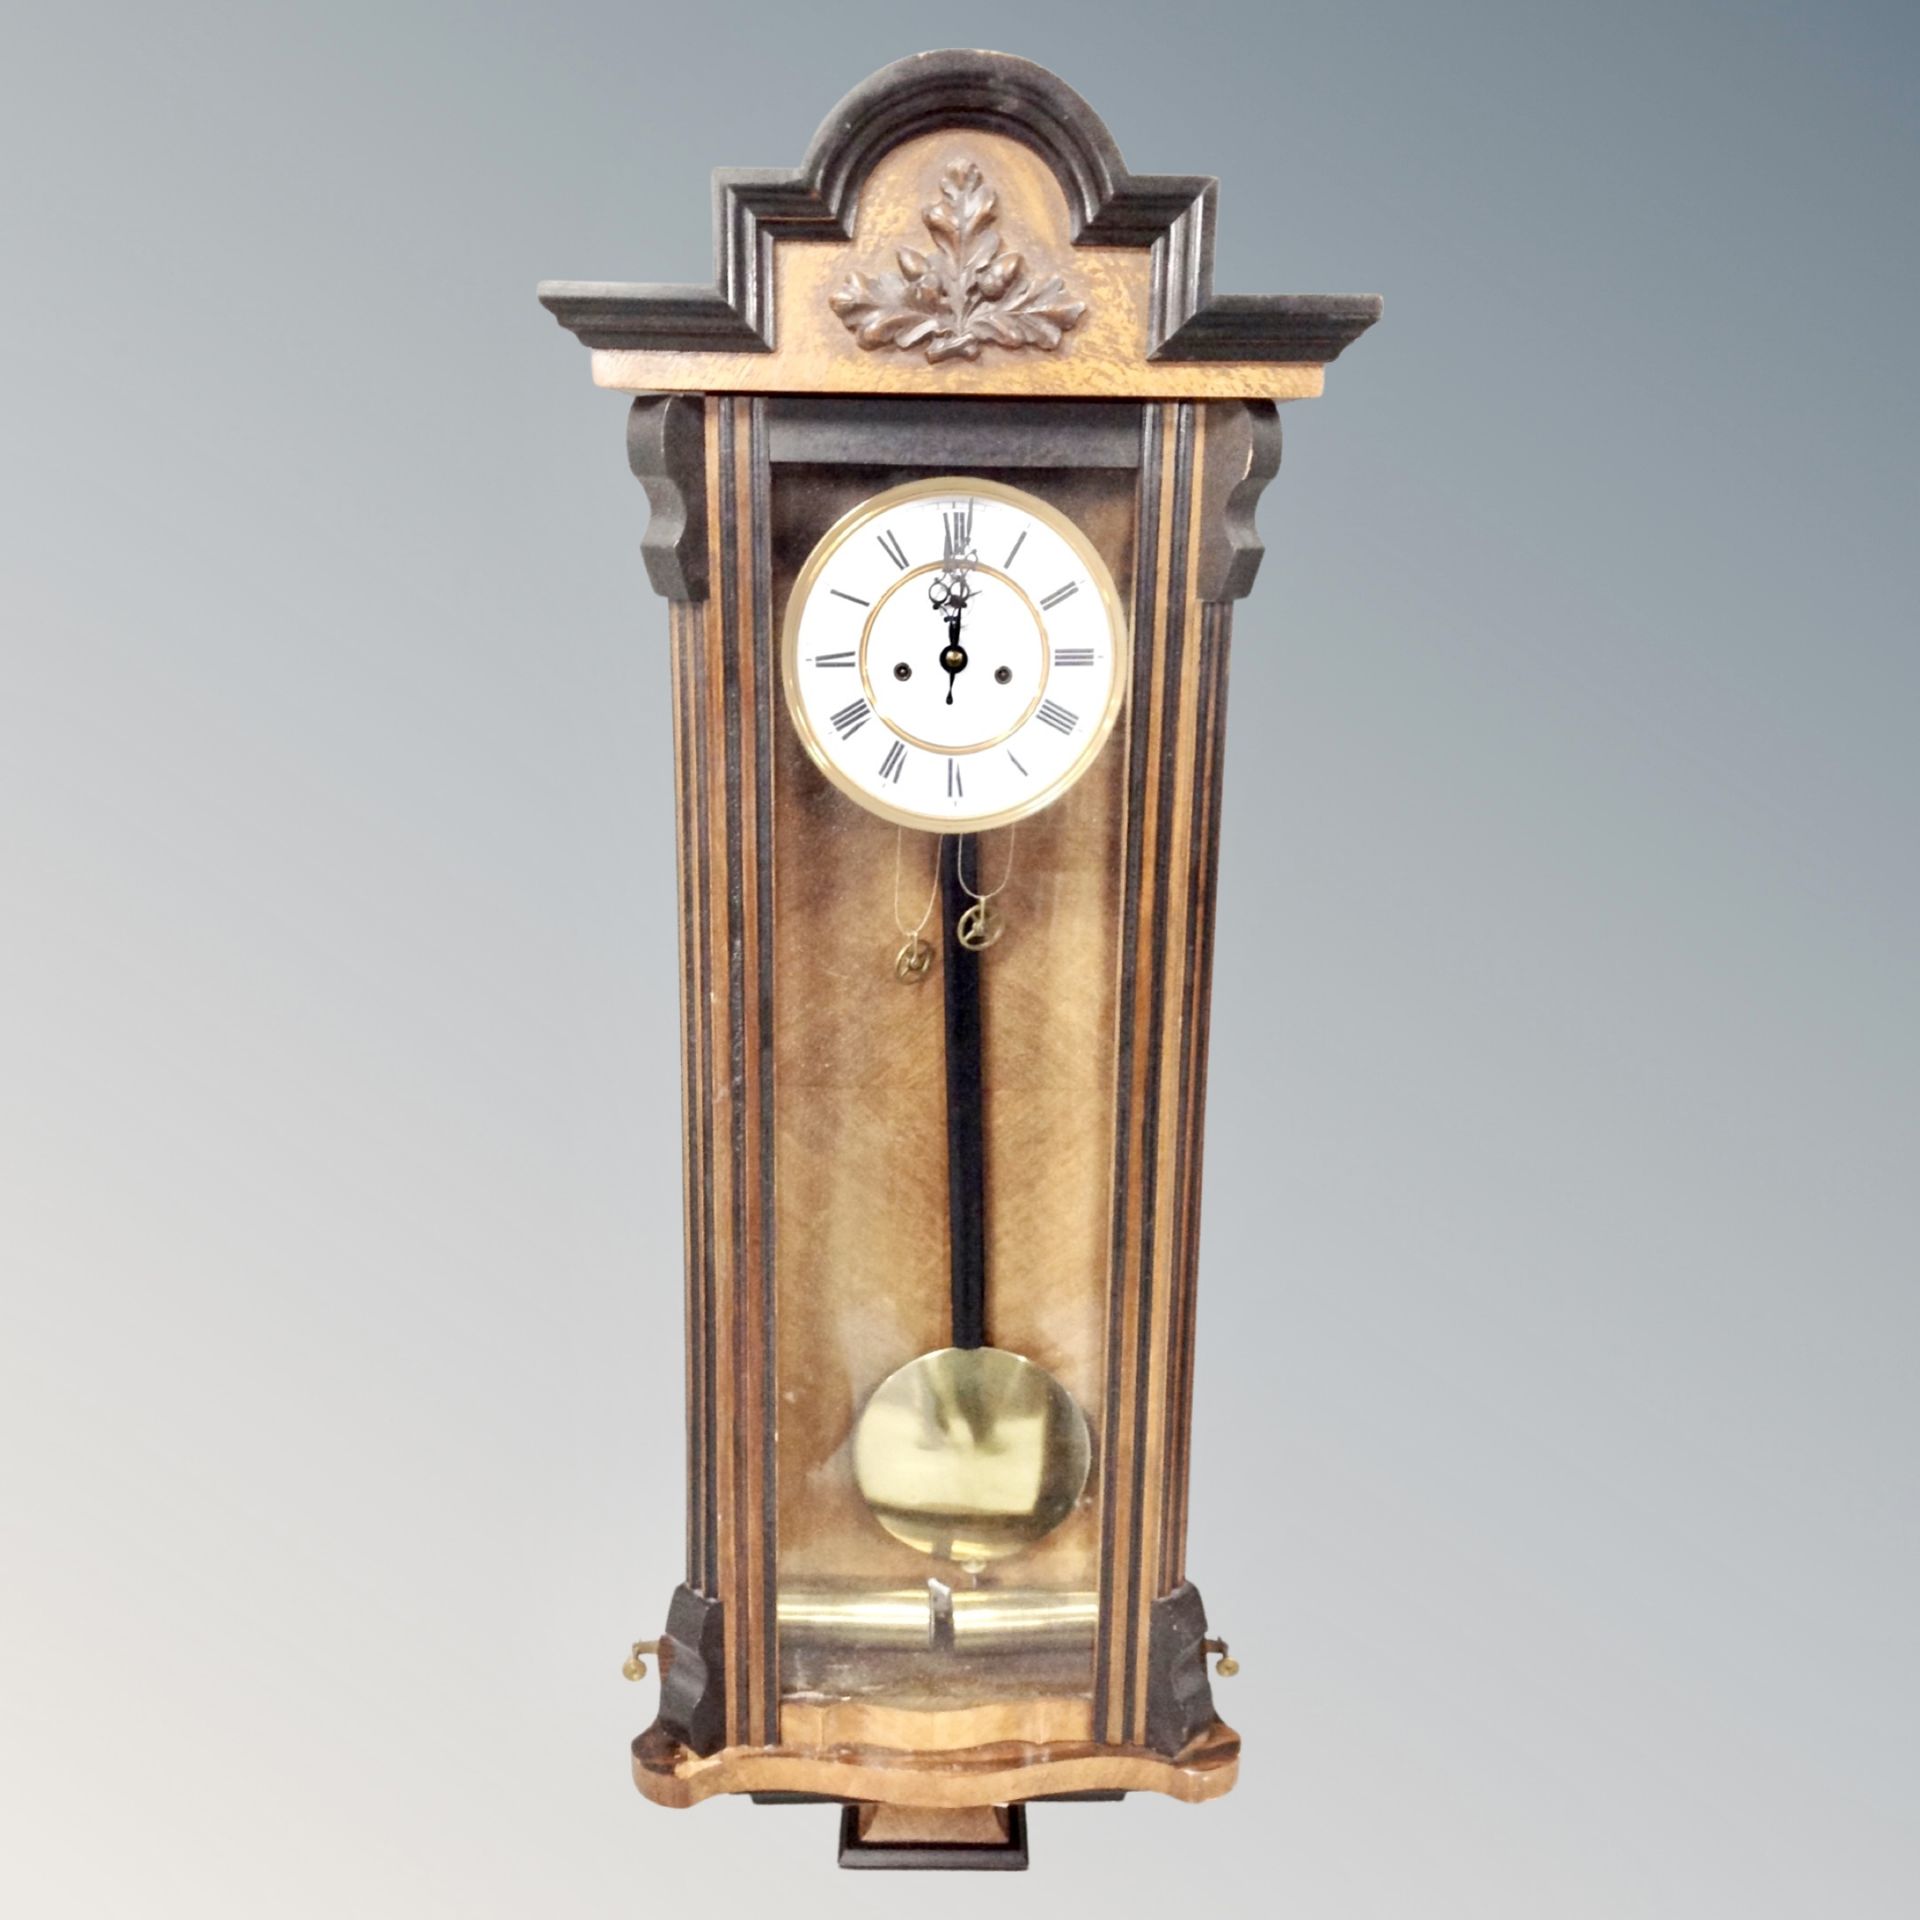 An antique Vienna style wall clock